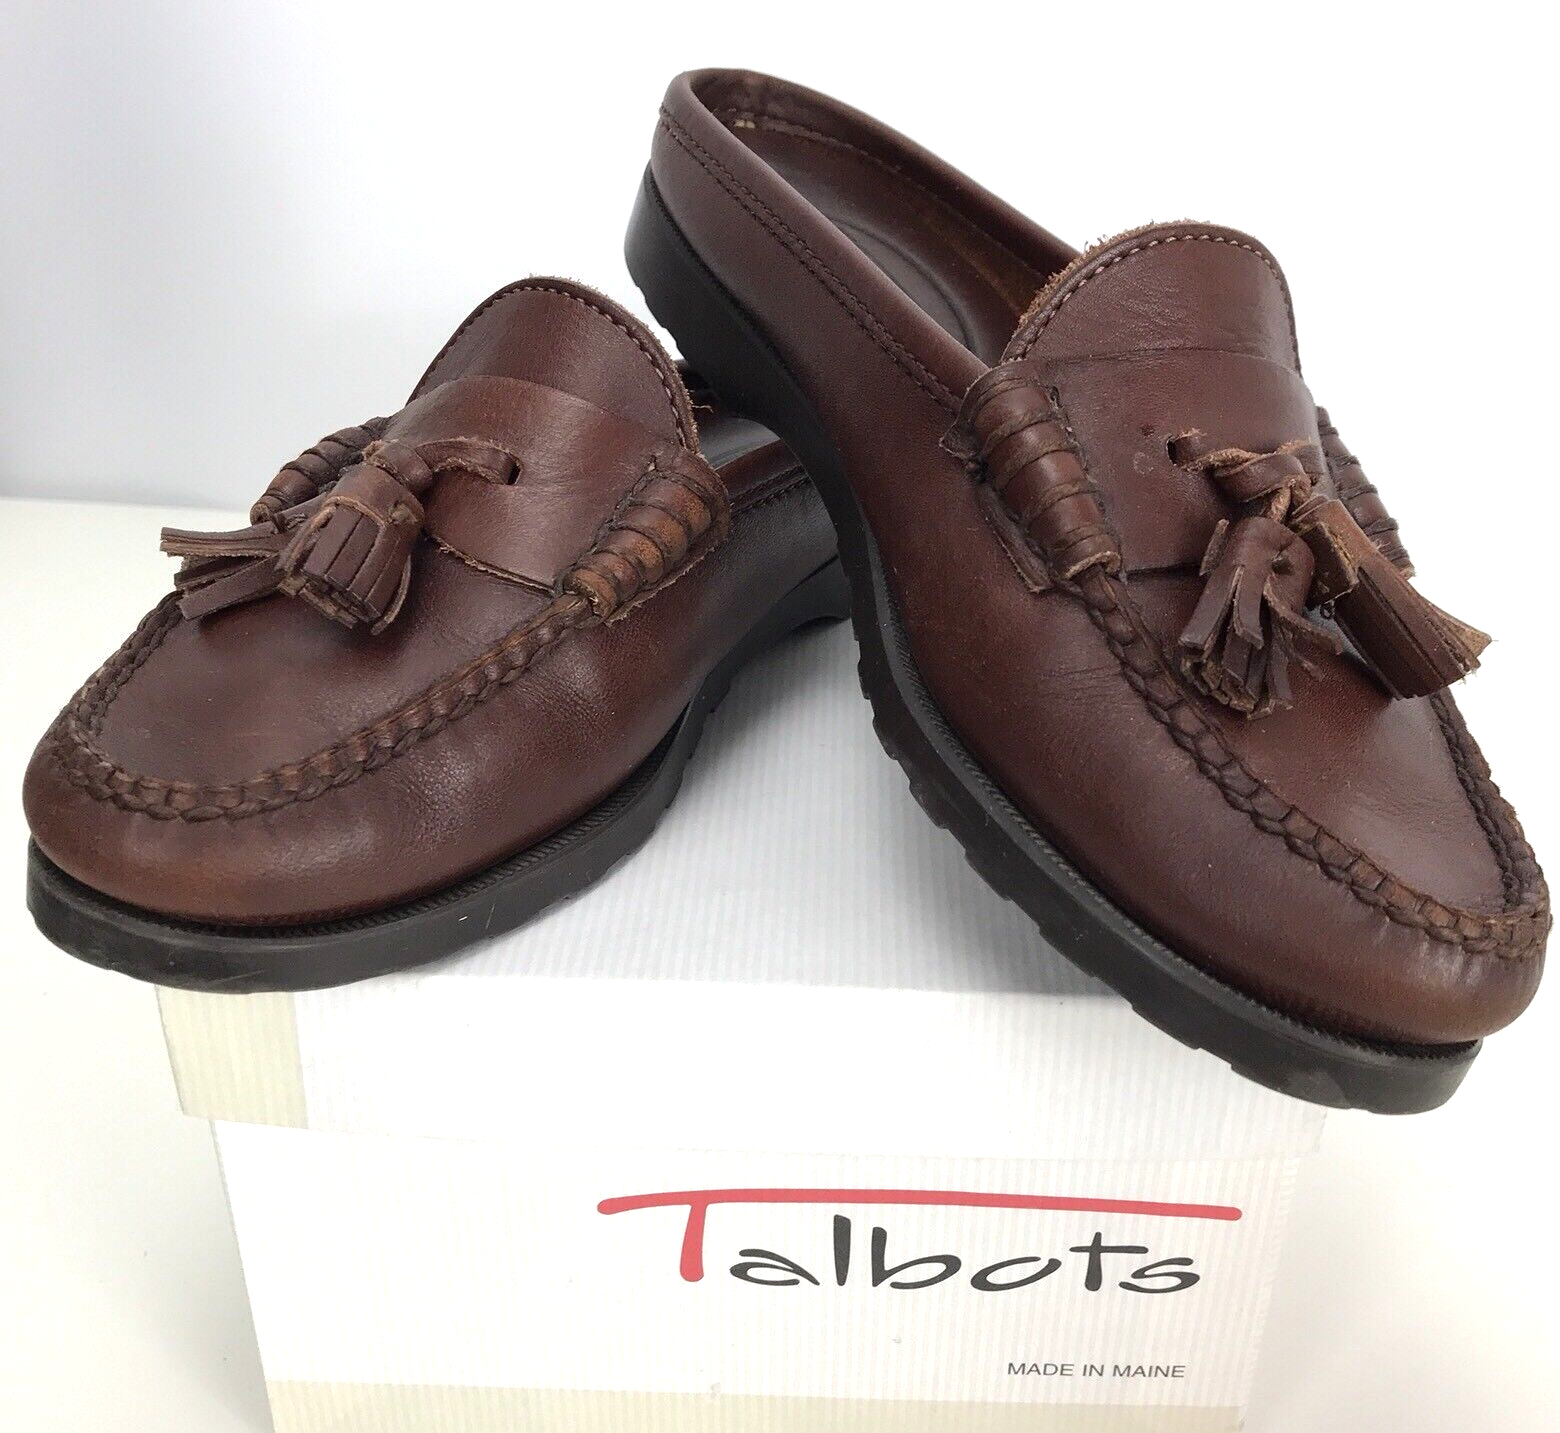 Primary image for Talbots 5.5 Shoes Slip On Flats Slide Tassel Brown Leather Mule No Back Loafer